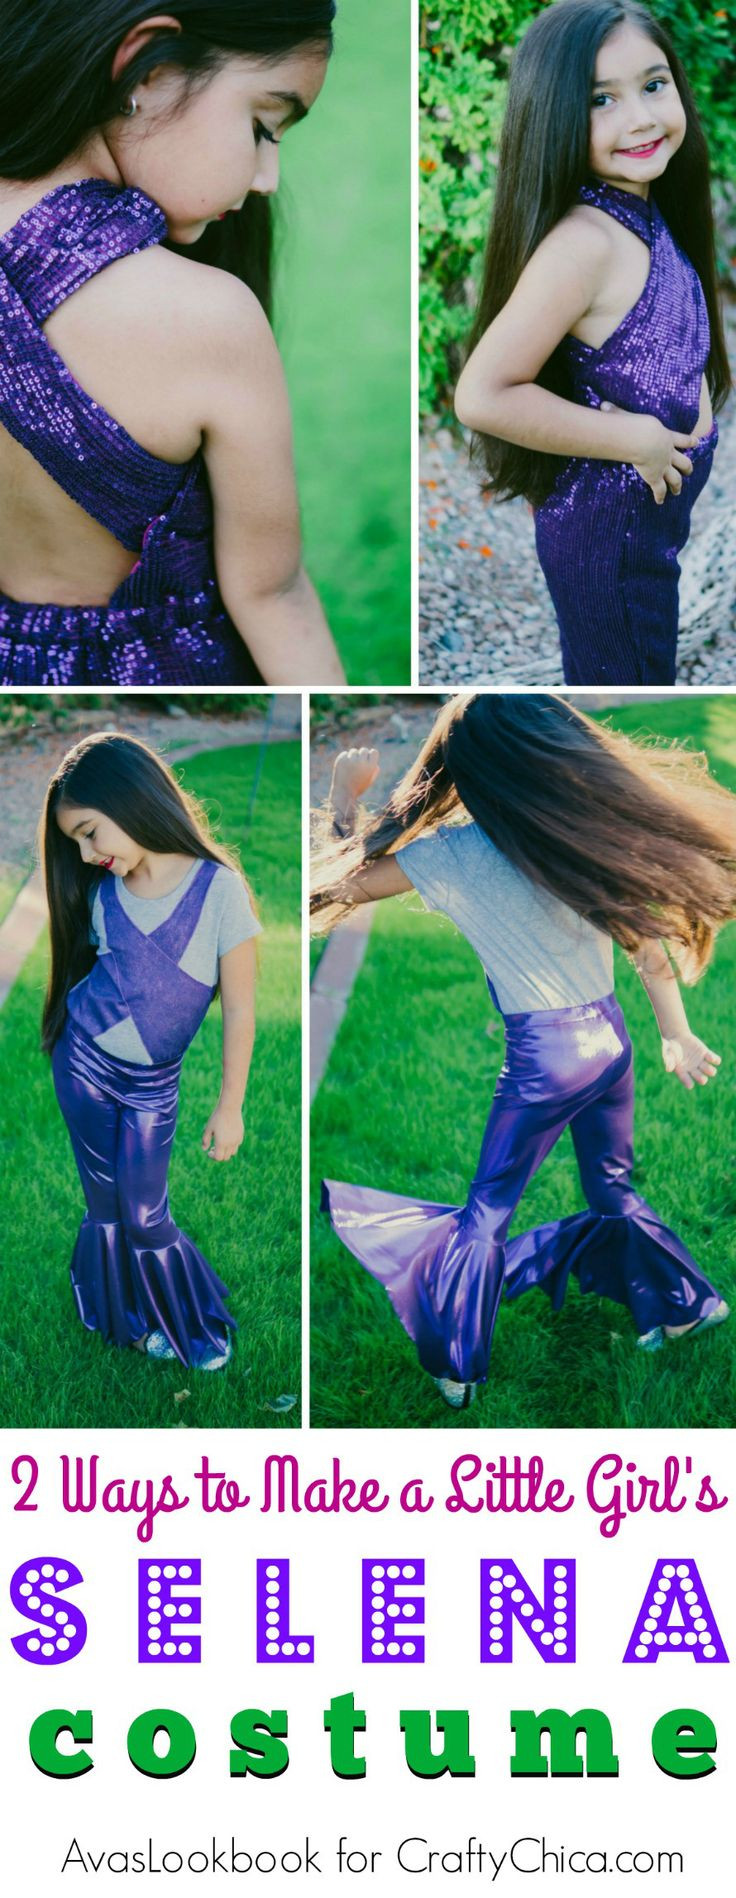 Best ideas about DIY Selena Quintanilla Costume
. Save or Pin Selena Costume DIY Selena Quintanilla Perez Now.